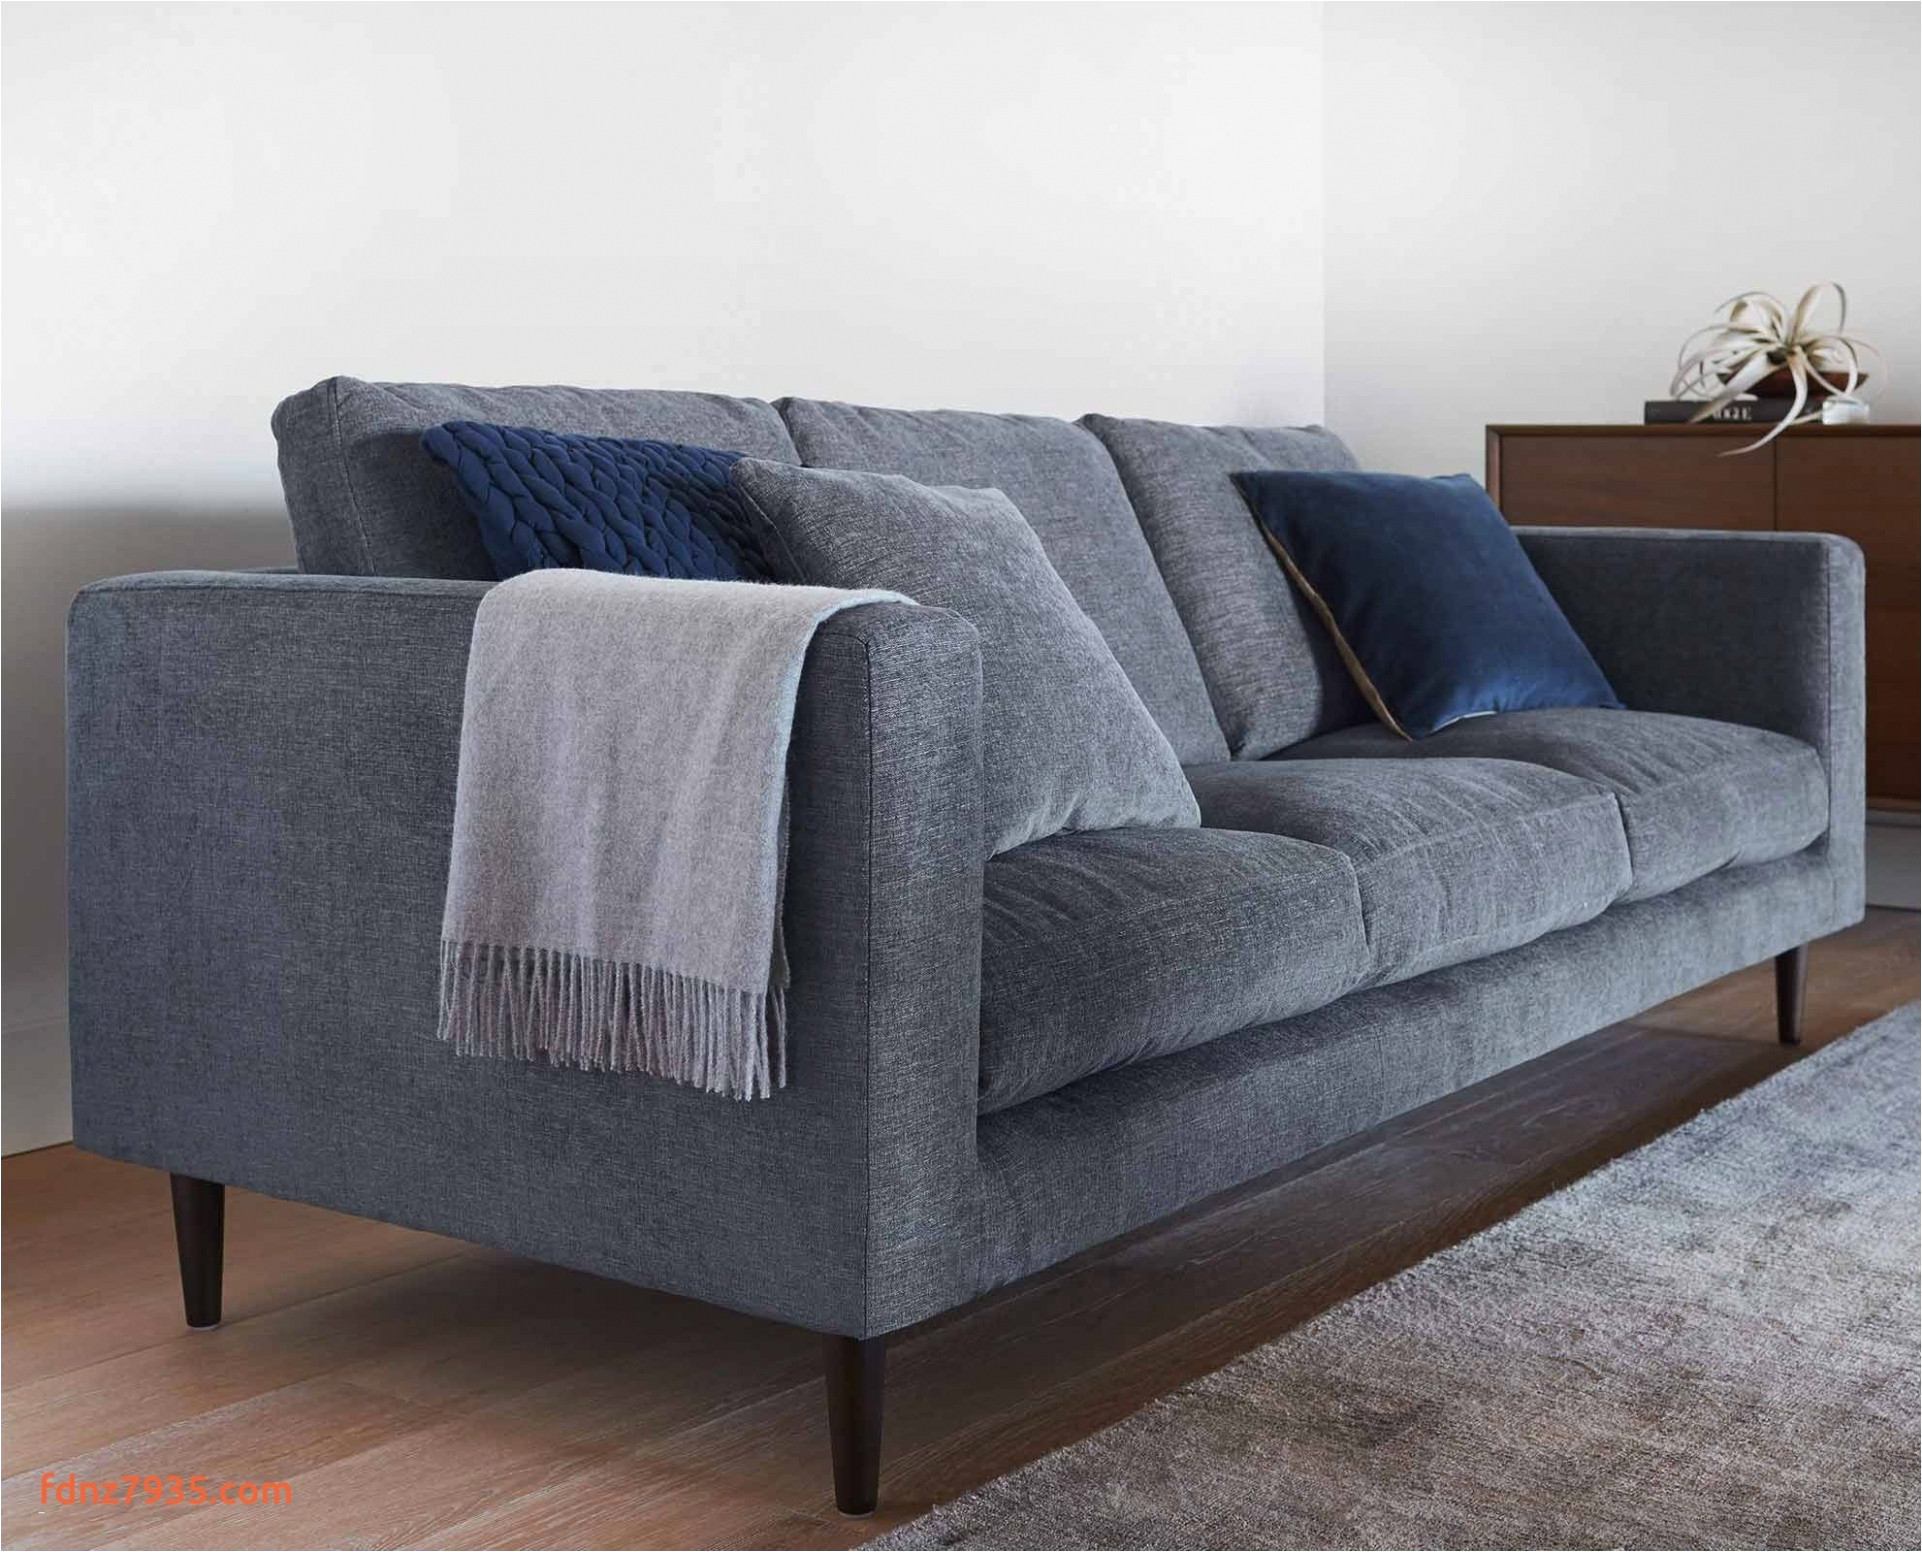 full size of futon exquisit wayfair futon couch furniture furniture www wayfair furniture 0d a